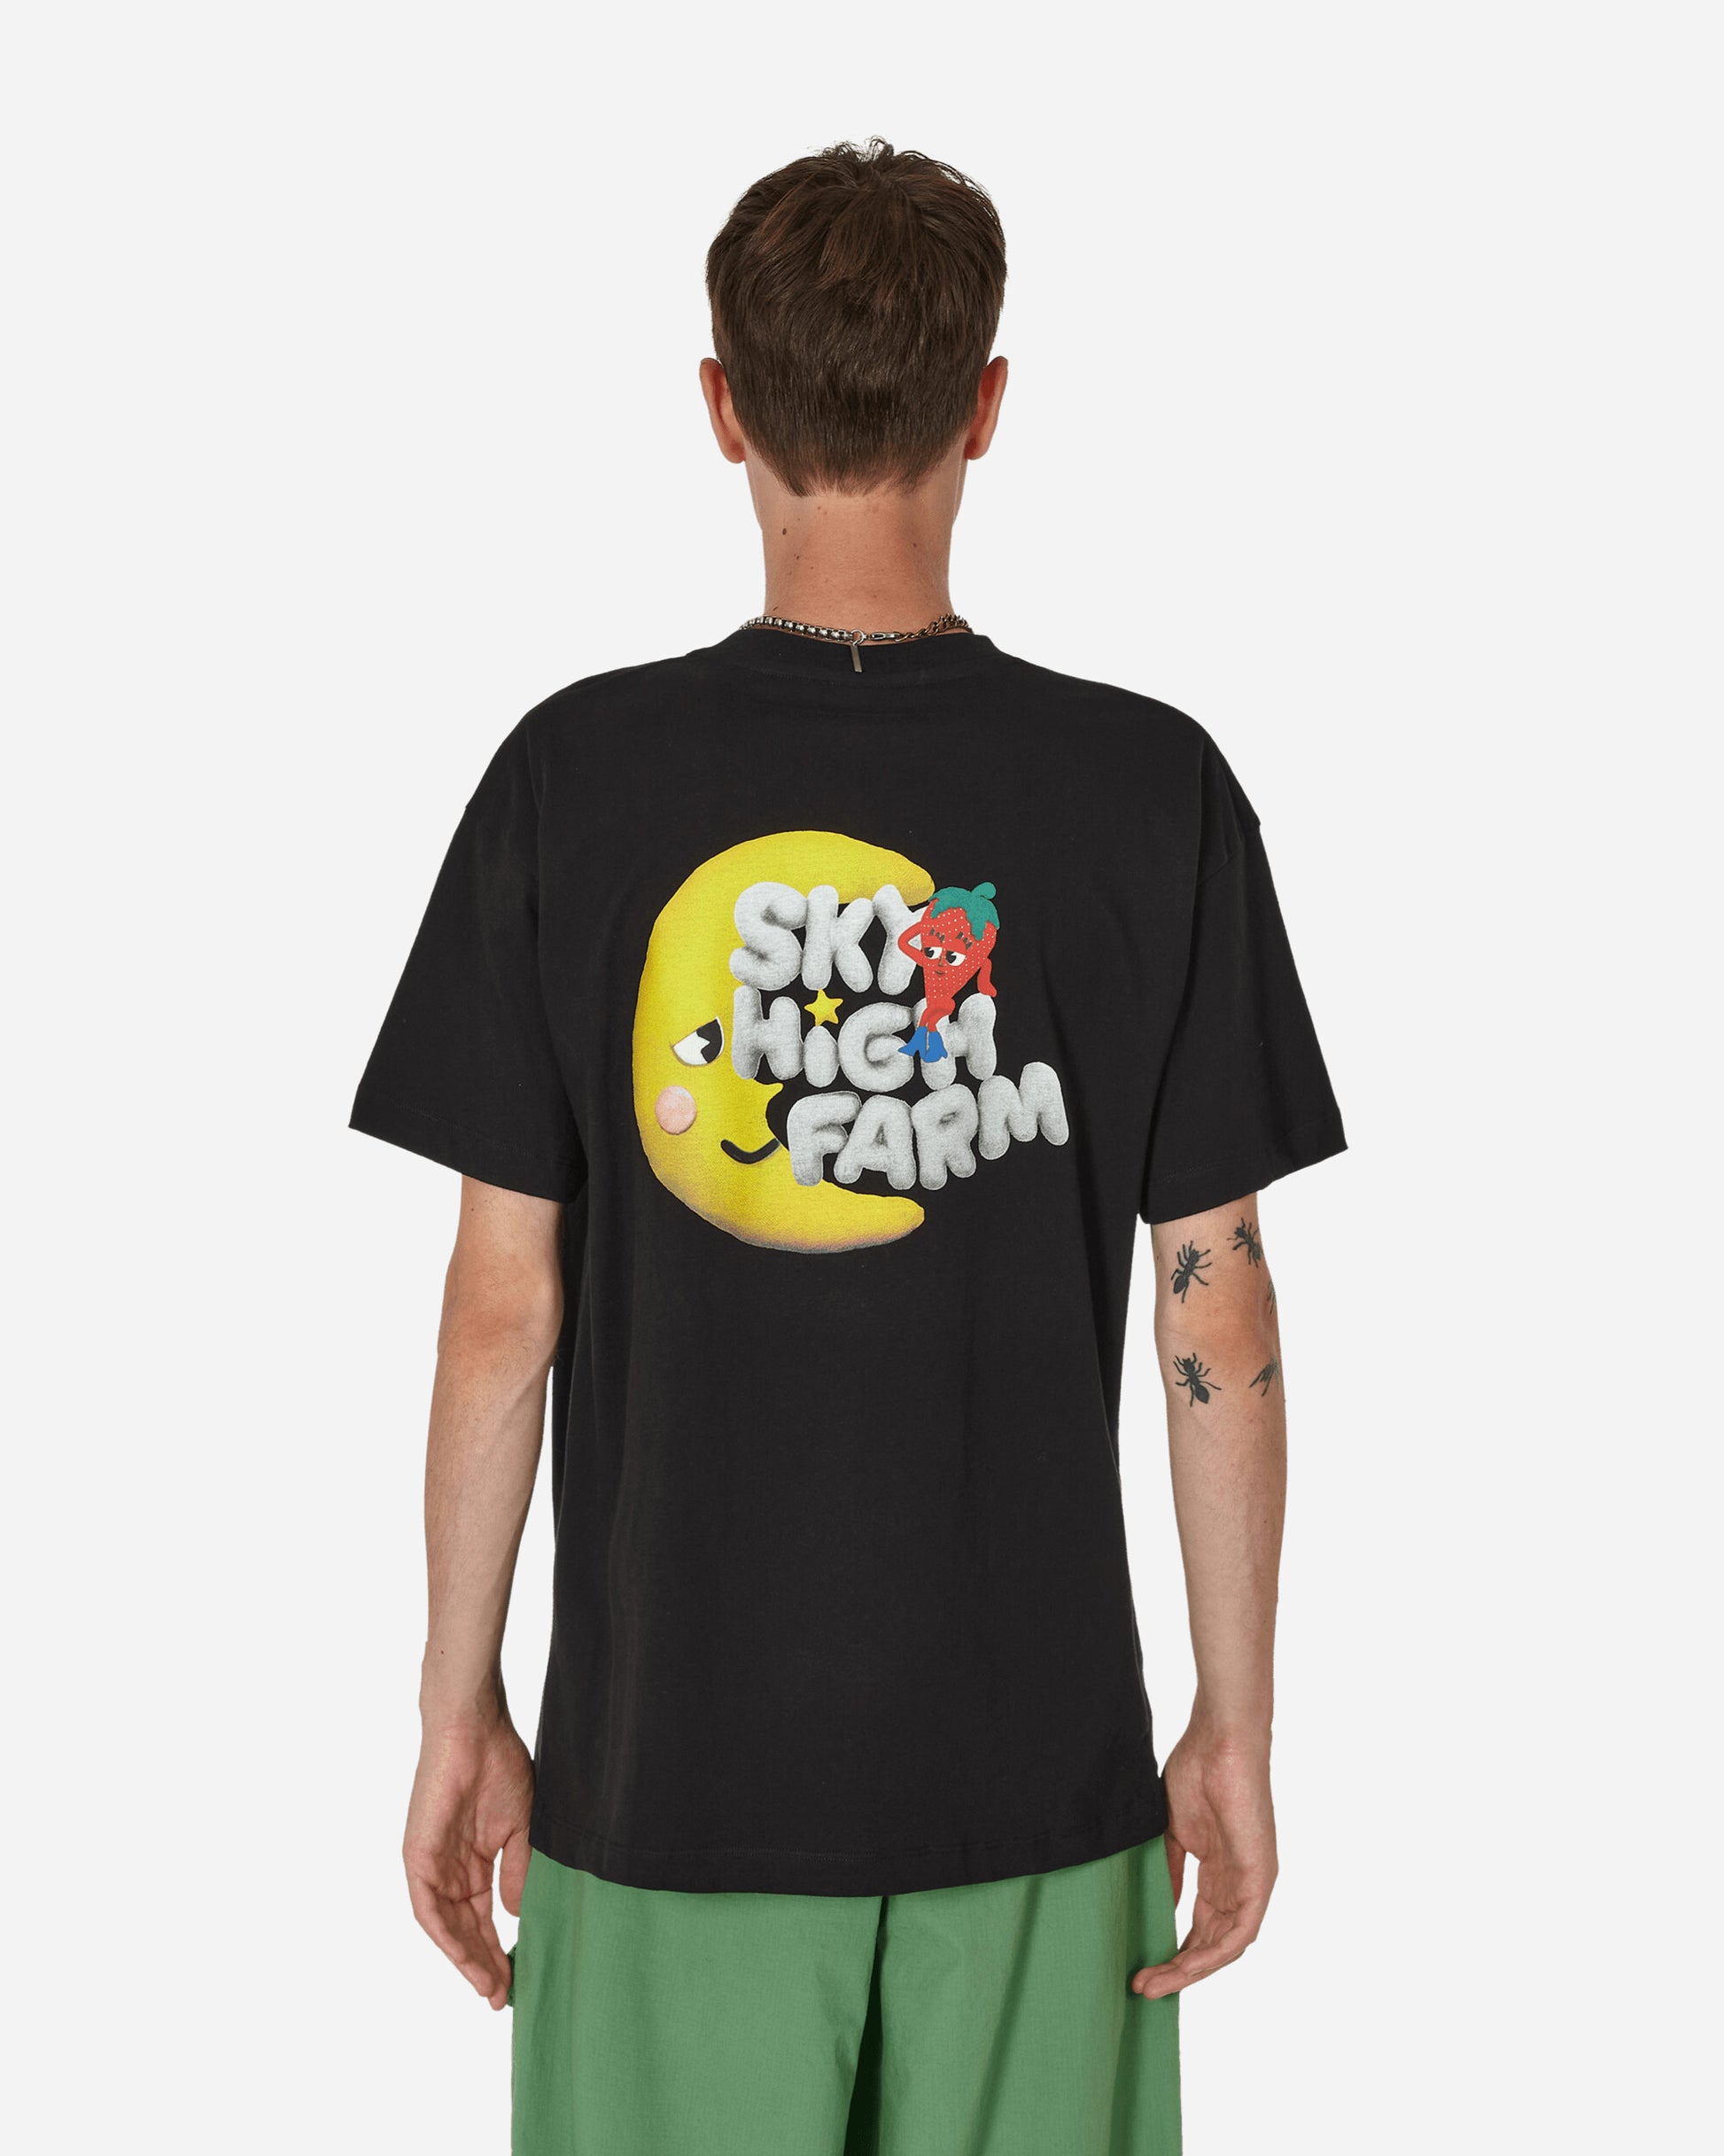 Sky High Farm Perennial Shana Graphic T-Shirt Knit Black T-Shirts Shortsleeve SHF04T031  1